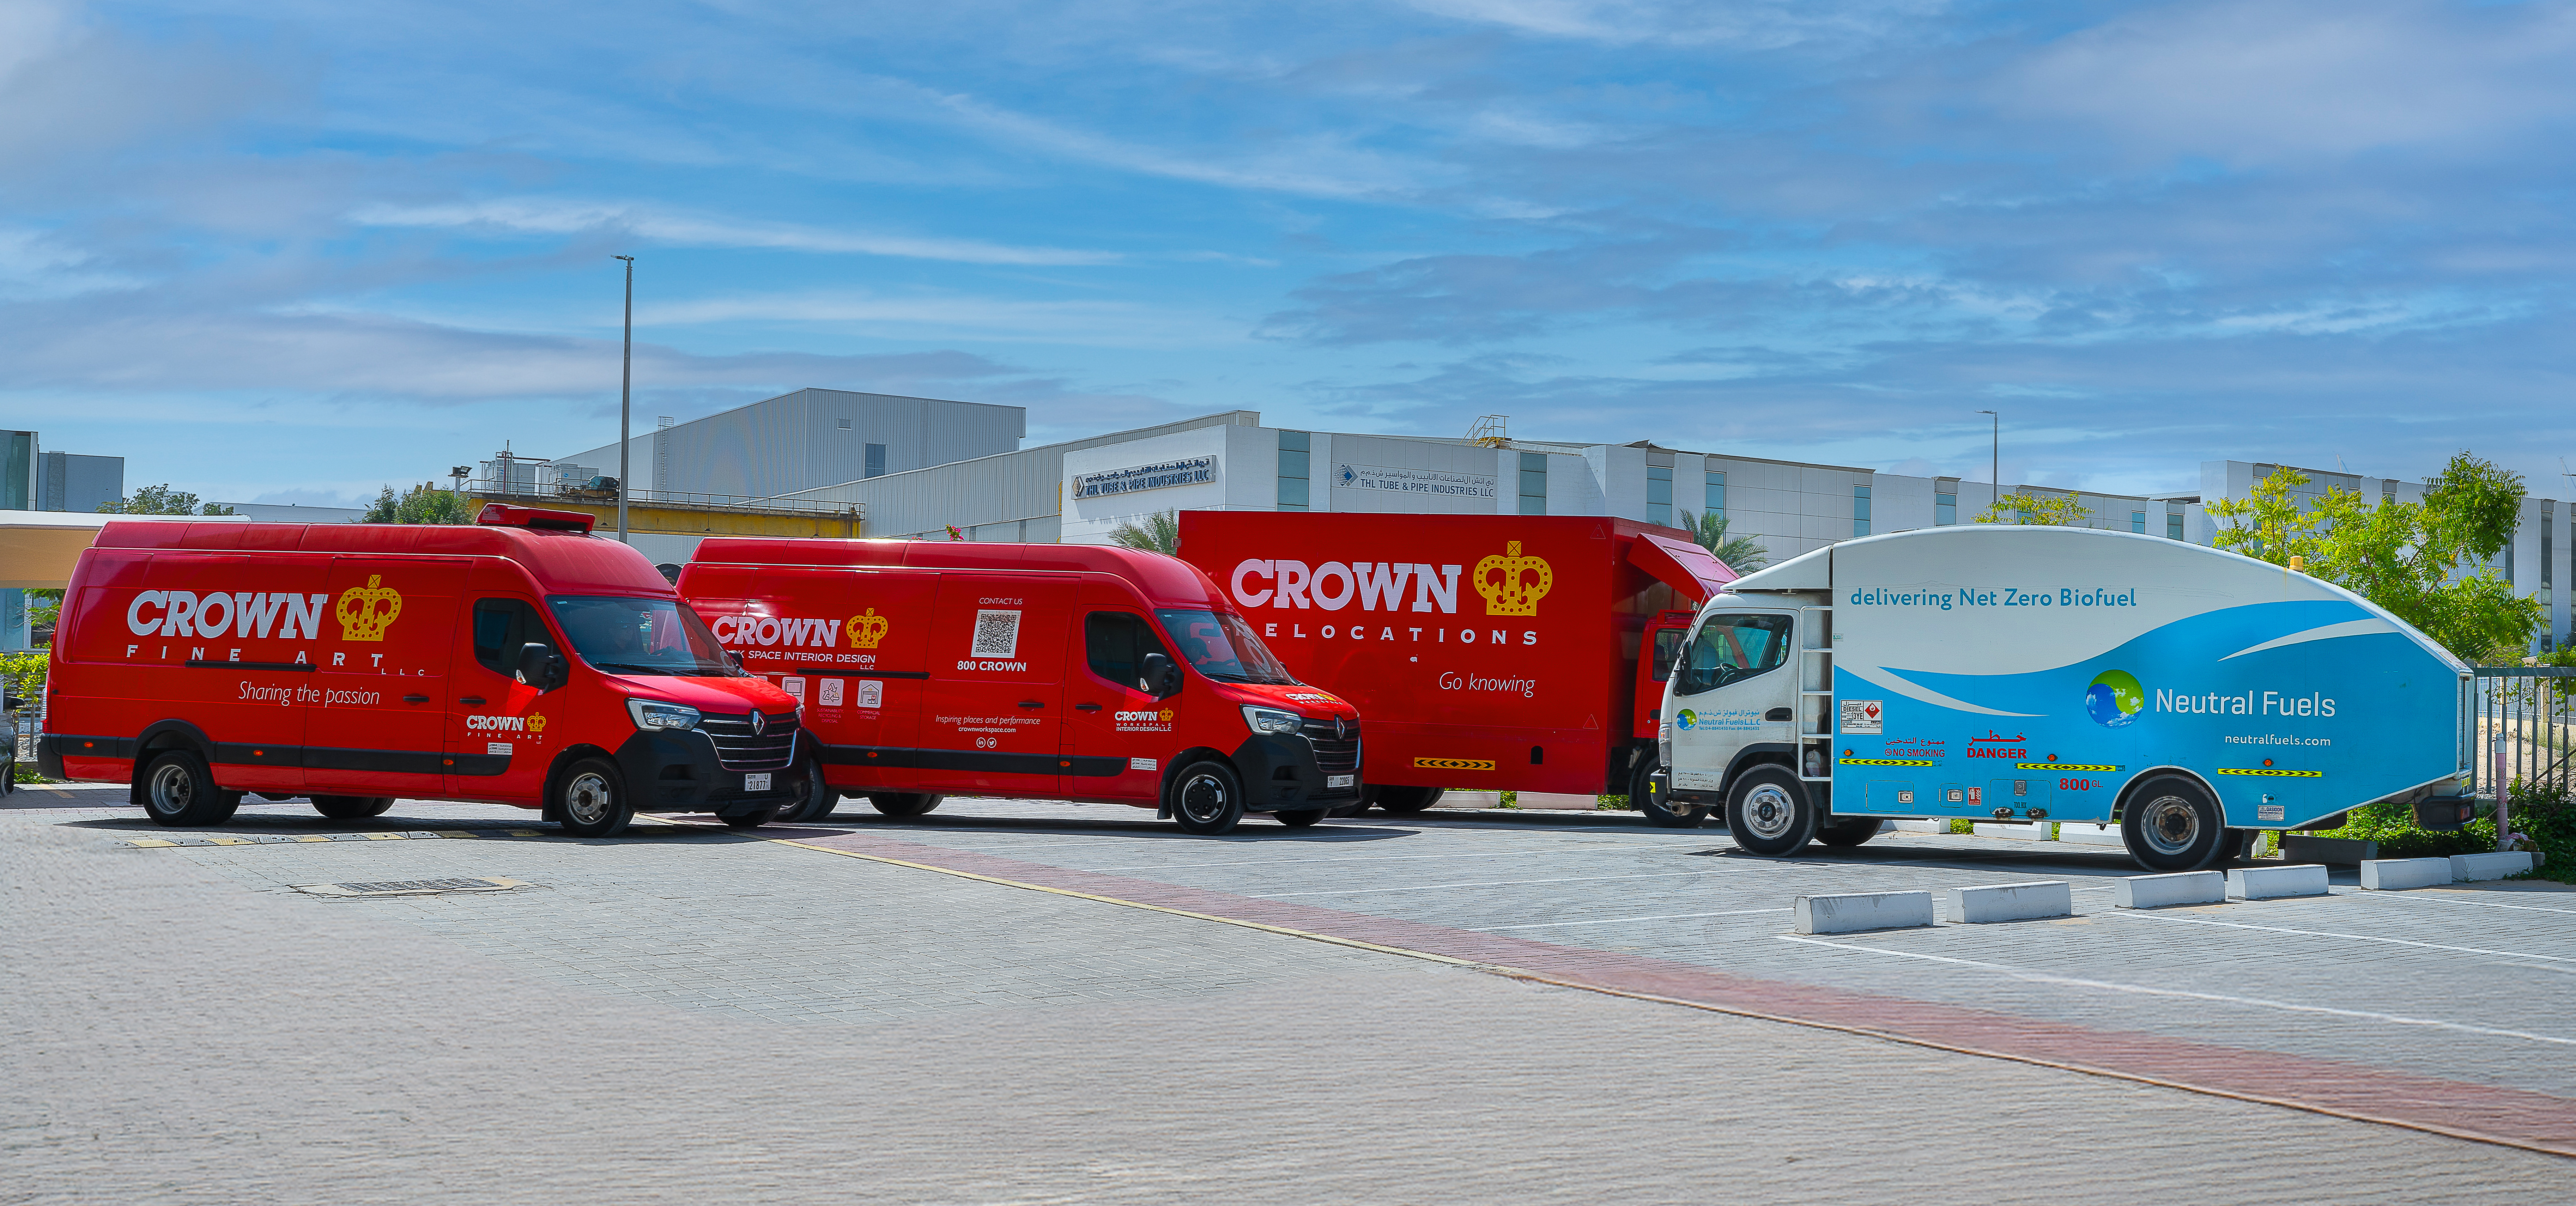 Crown Relocations, Fine Art and Workspace Trucks alongside a Neutral Fuels truck in Dubai, UAE